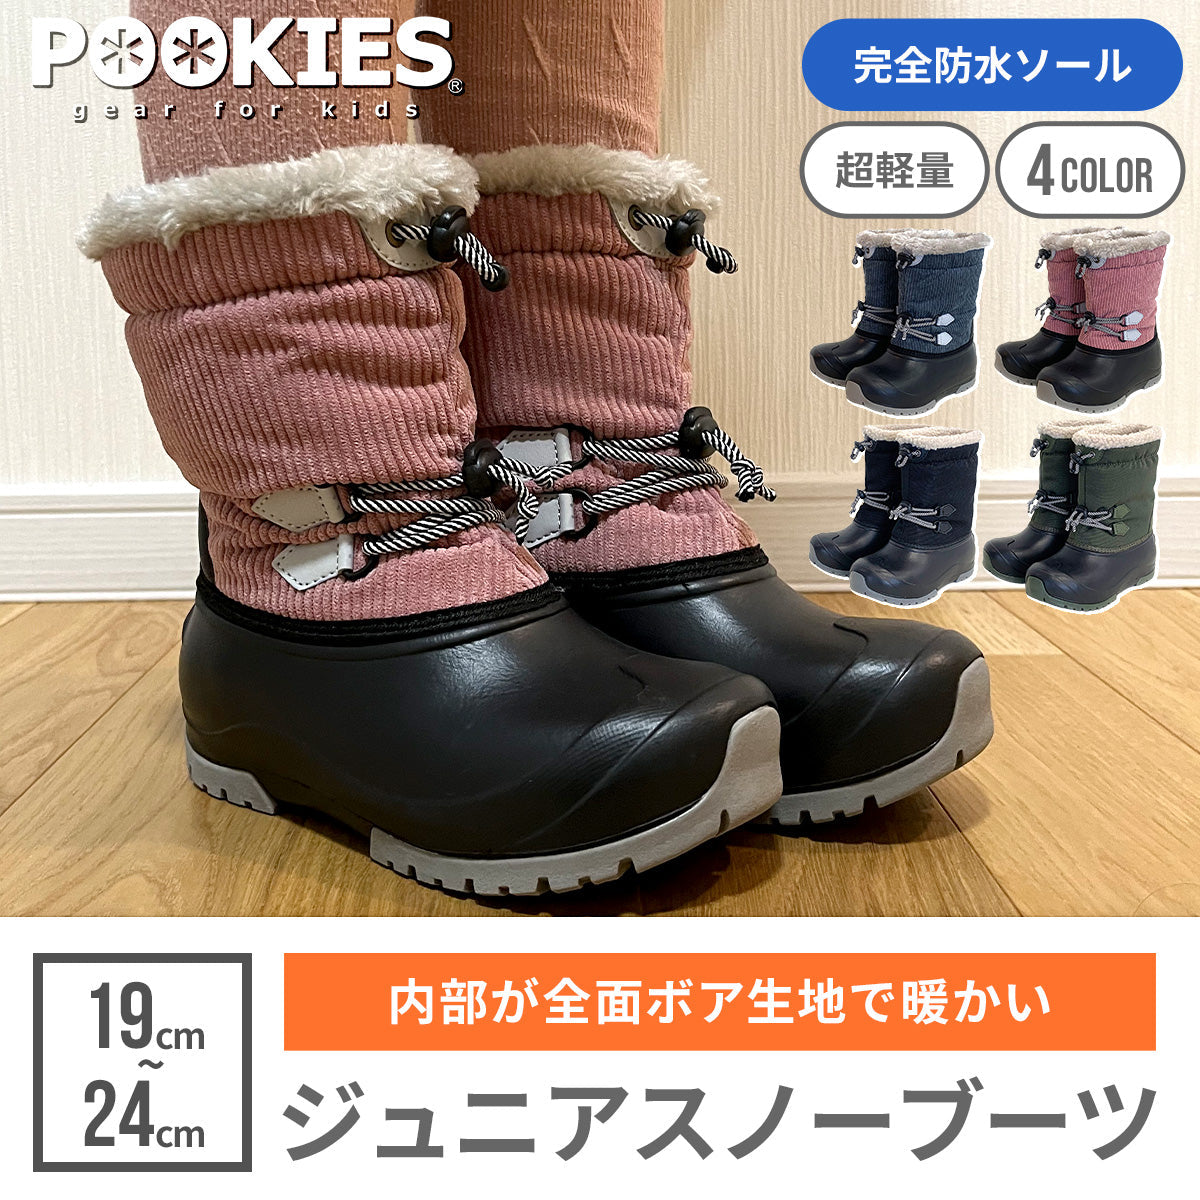 POOKIES(プーキーズ) スノーシューズ キッズ 子供用 完全防水 - 長靴